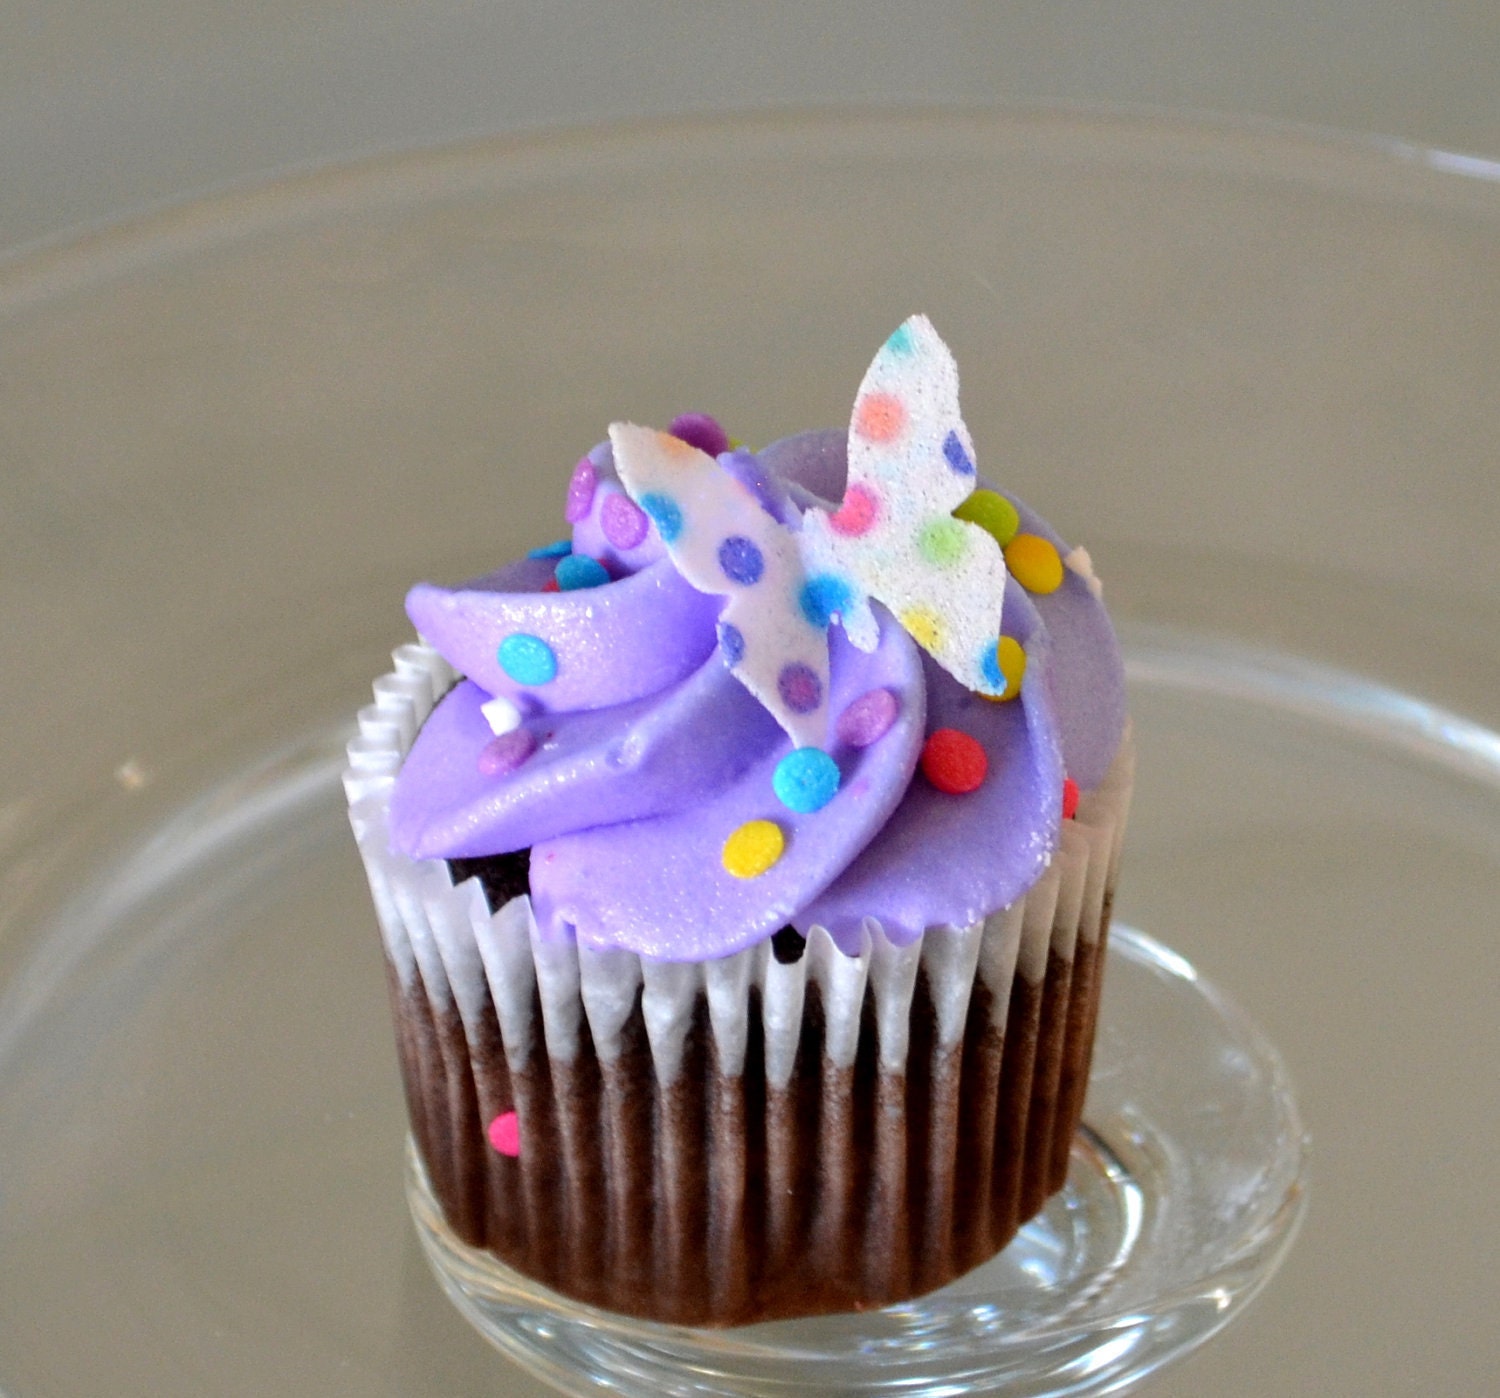 Edible Mini Butterflies - Rainbow Polka Dots 2 dozen - Cake & Cupcake toppers - Food Accessories - SugarRobot